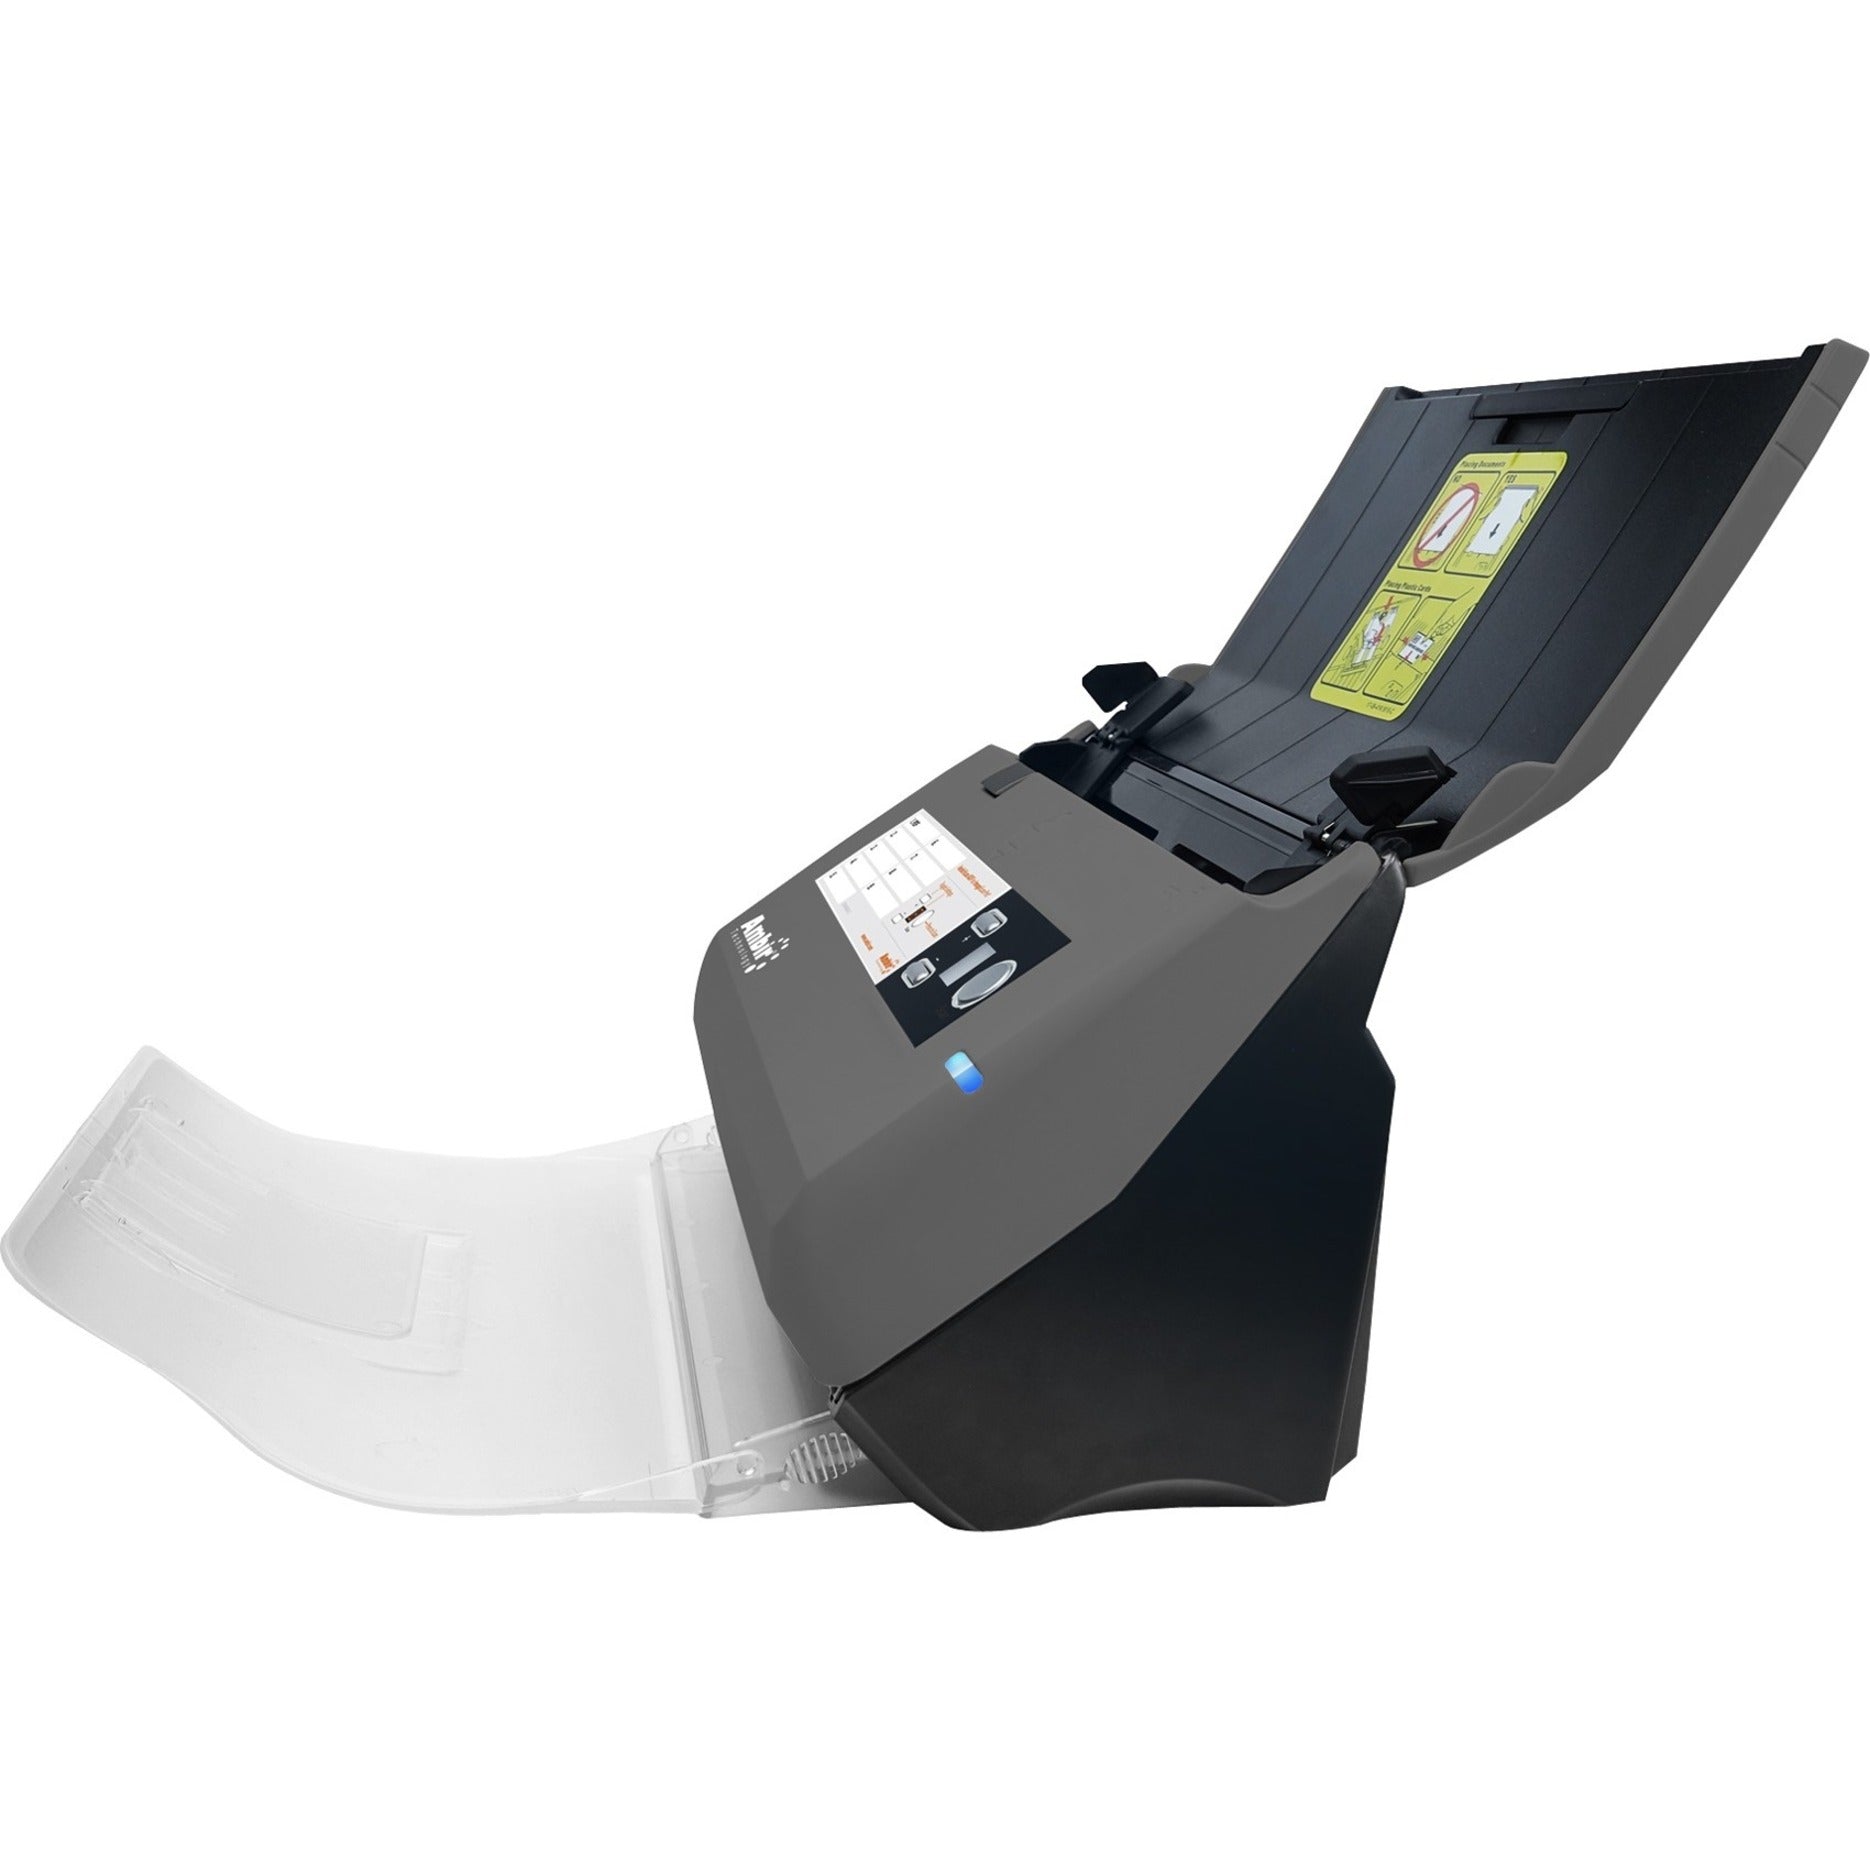 Ambir DS830ix-AS ImageScan Pro 830ix Sheetfed Scanner, Color, Duplex Scanning, 600 dpi Optical Resolution